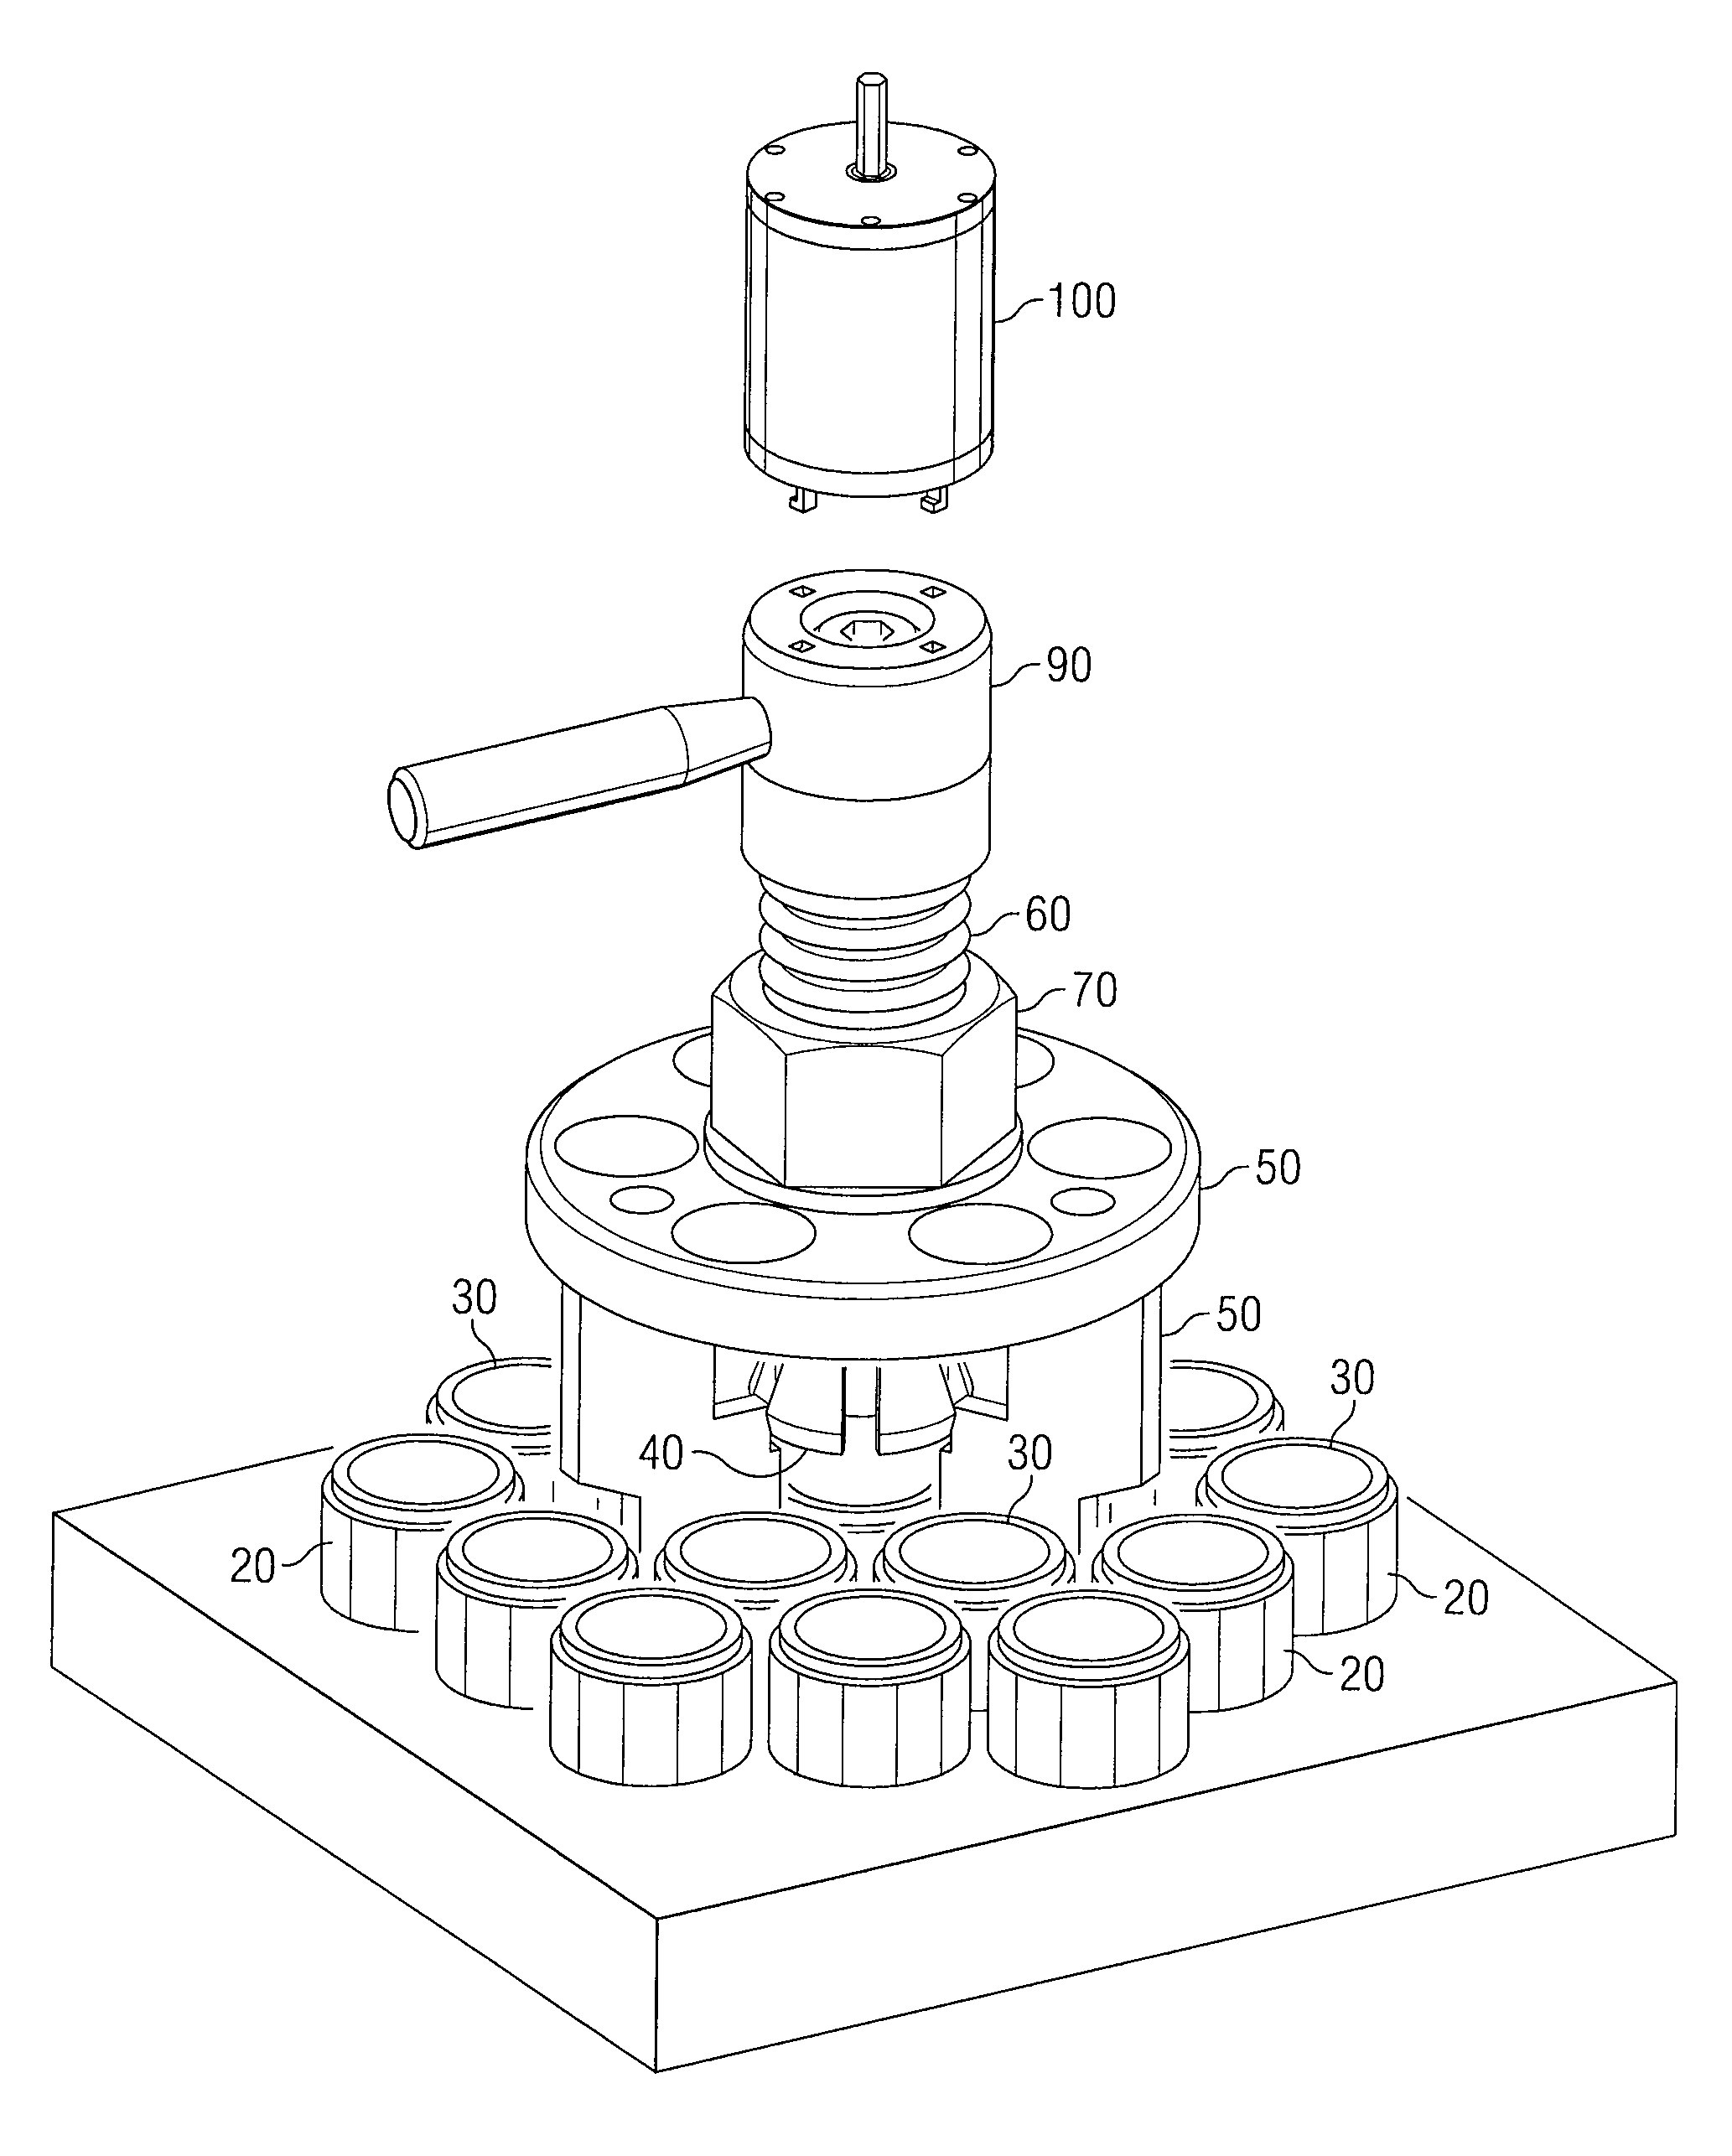 Rotary mechanical vibration mechanism